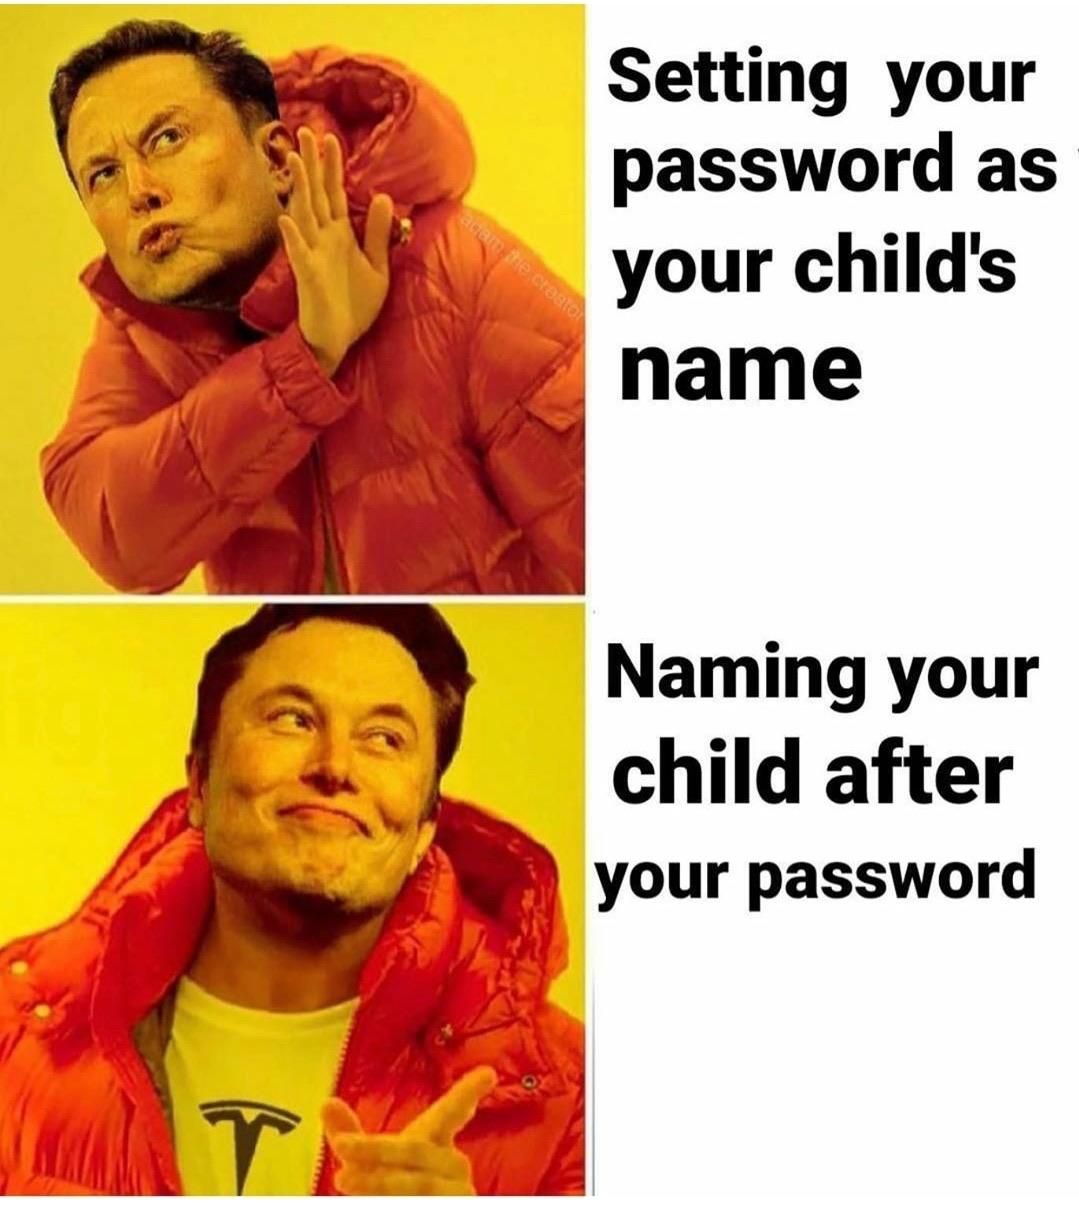 Naming your child X Æ A-12